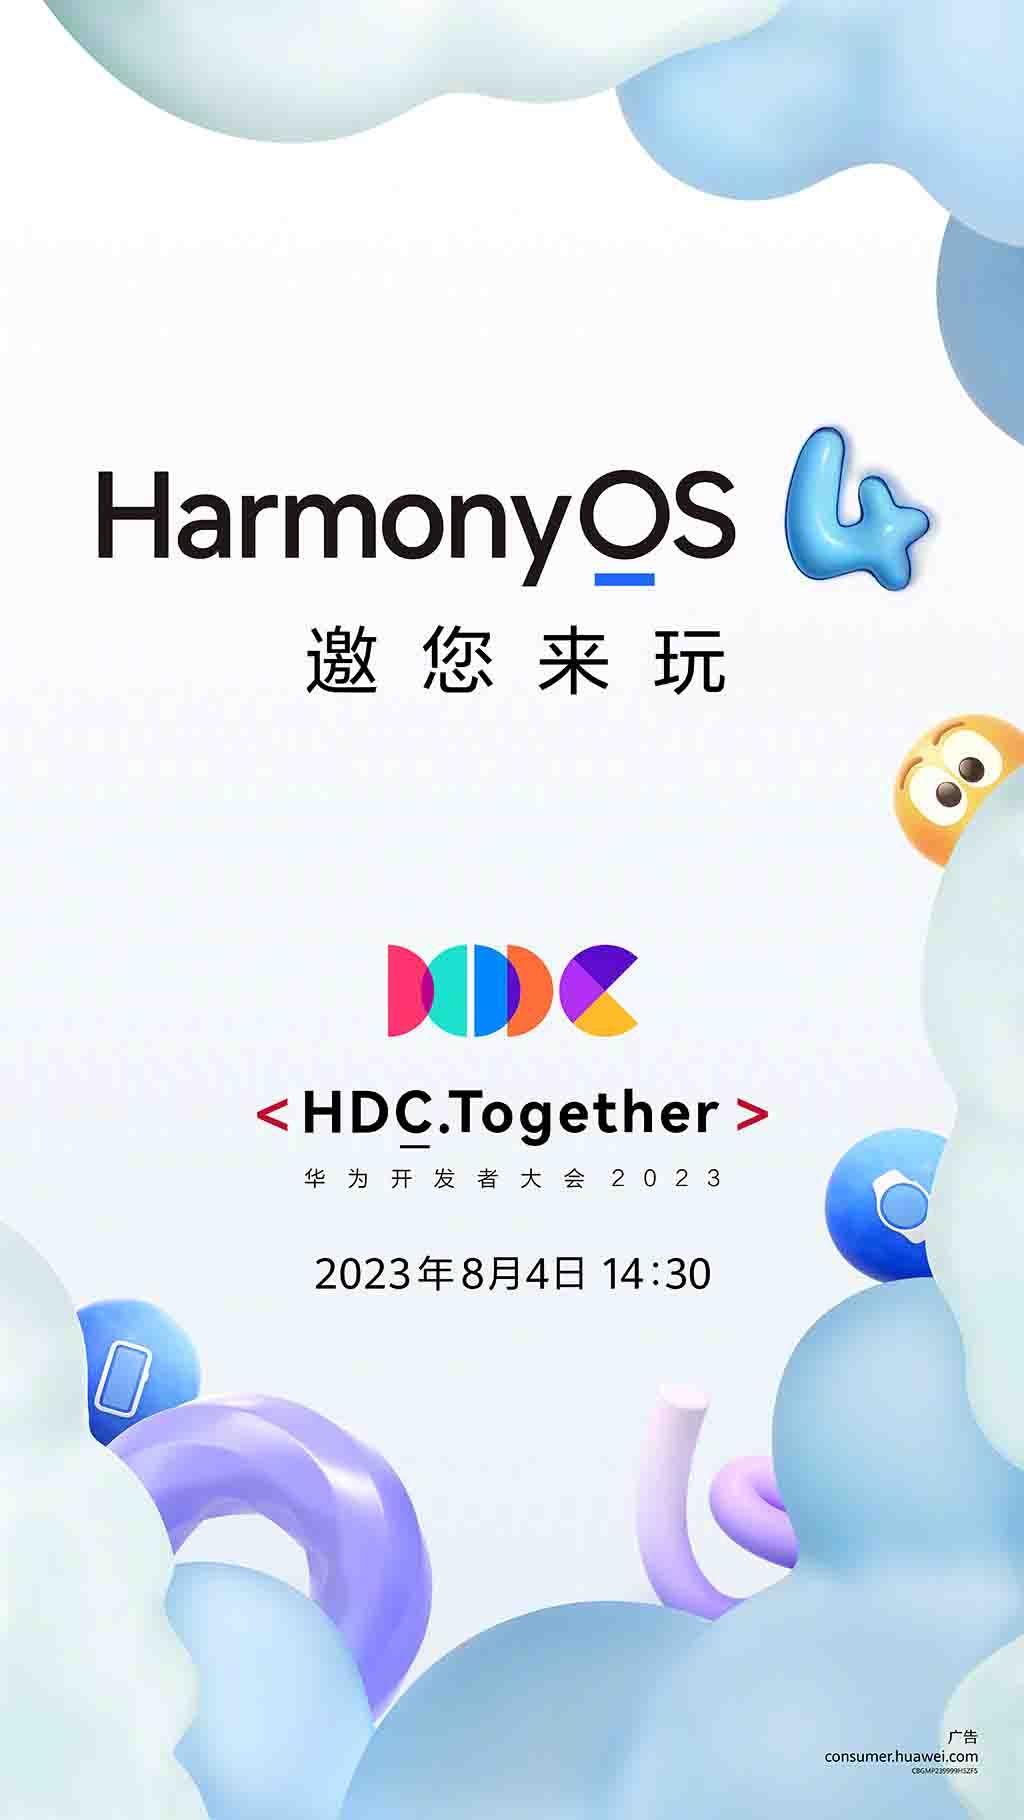 HarmonyOS 4 operating system 